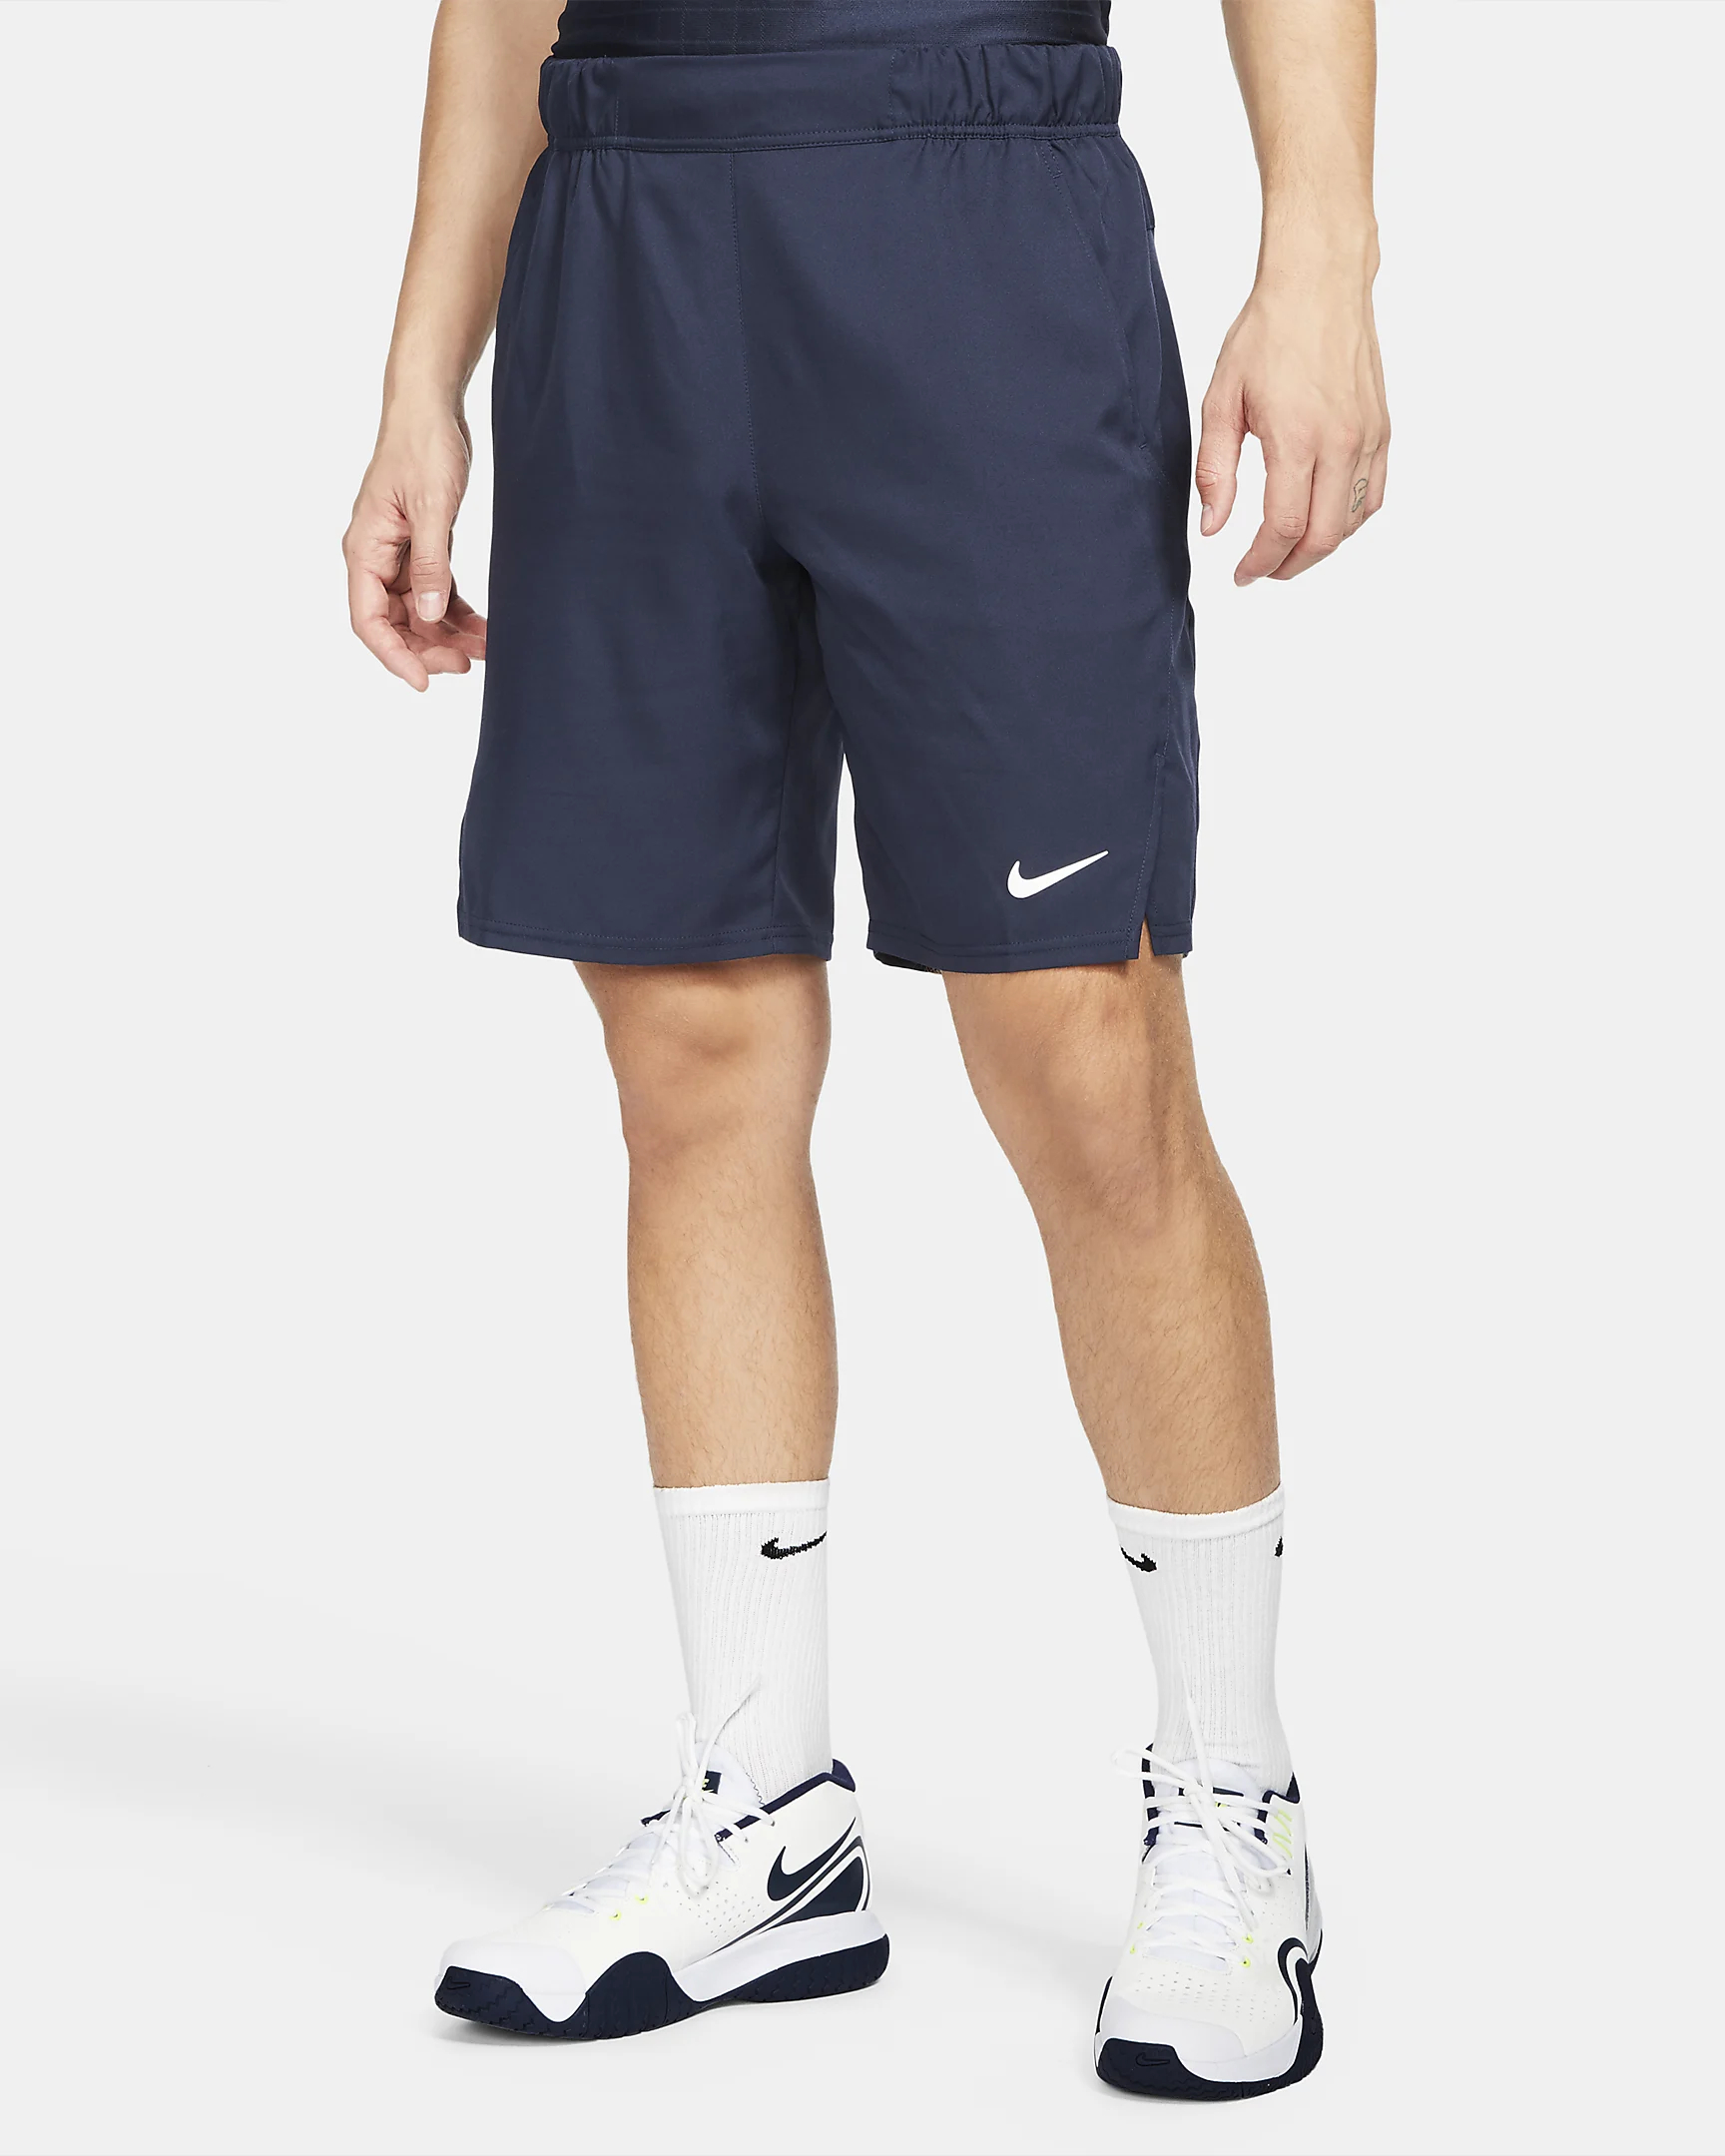 Спортивные шорты мужские Nike Nkct Dry Victory Short, CV2545-451, размер S